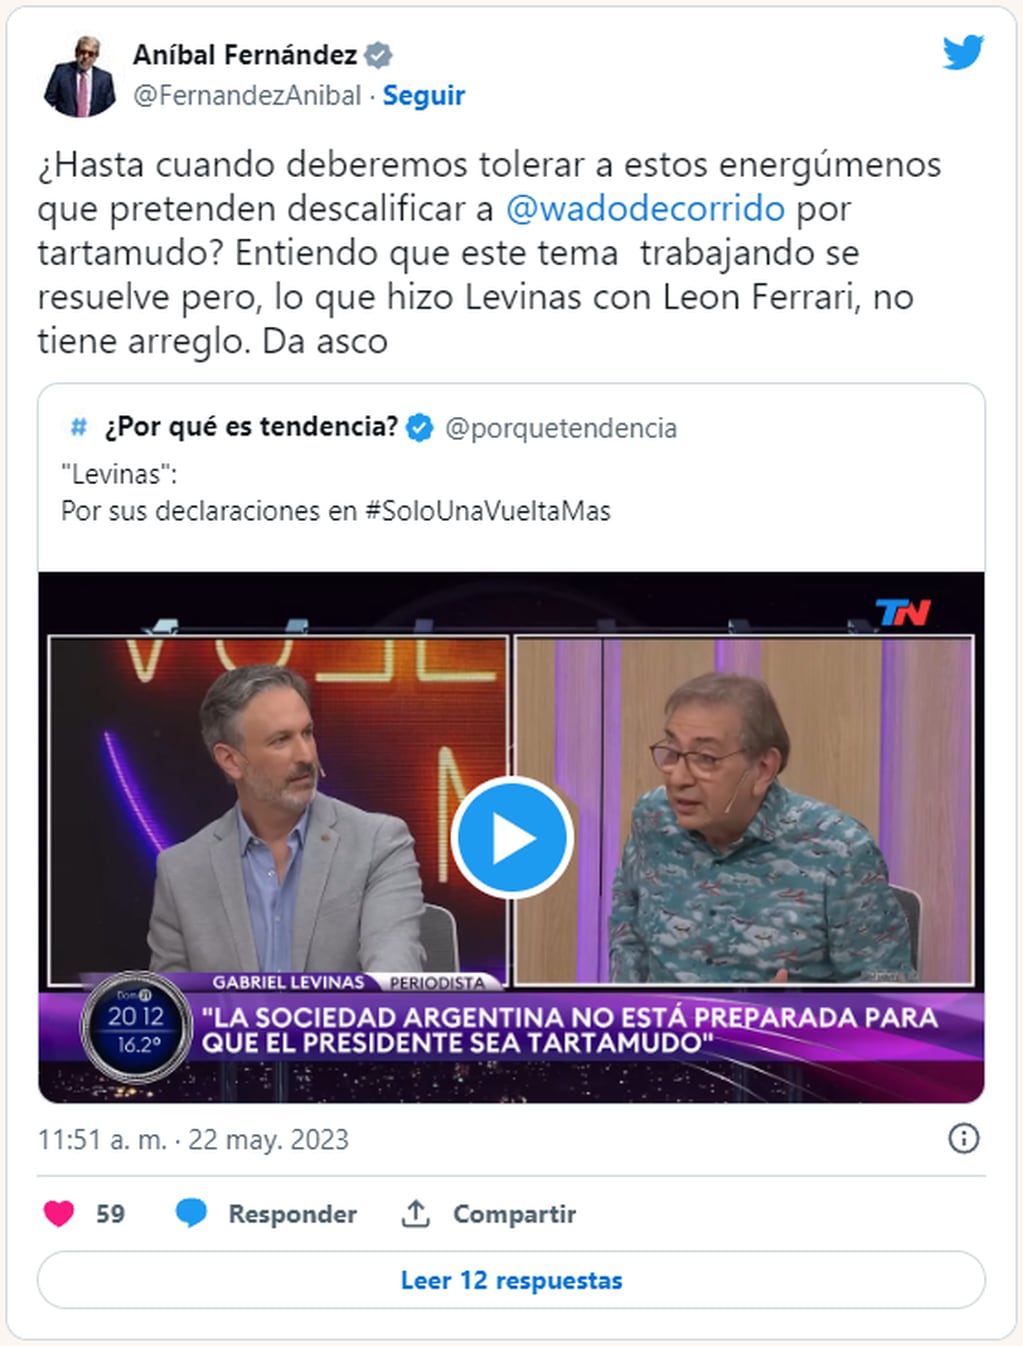 Aníbal Fernández repudió las declaraciones de Gabriel Levinas. Foto: Twitter/@FernandezAnibal